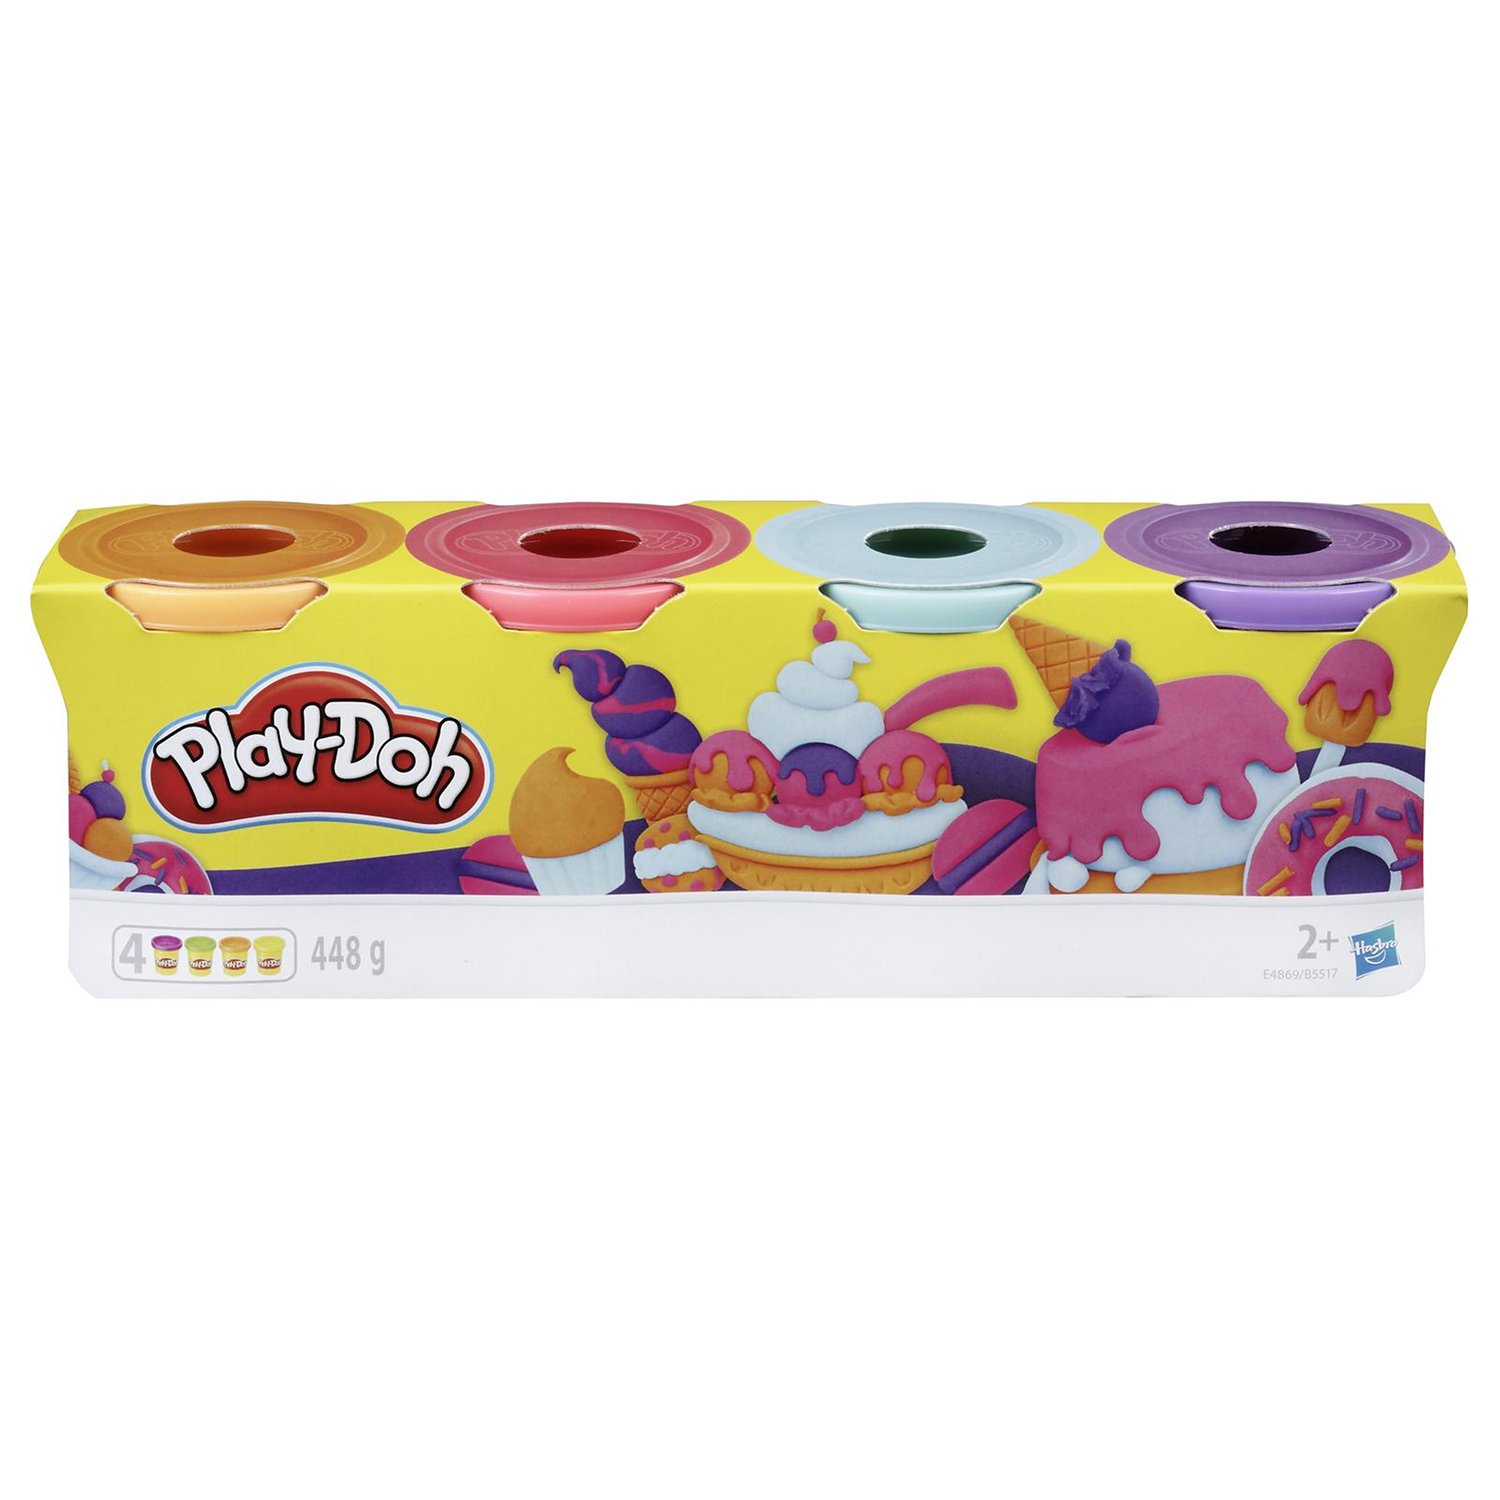 Пластилин Play-Doh 4цвета в ассортименте B5517EU4 - фото 7